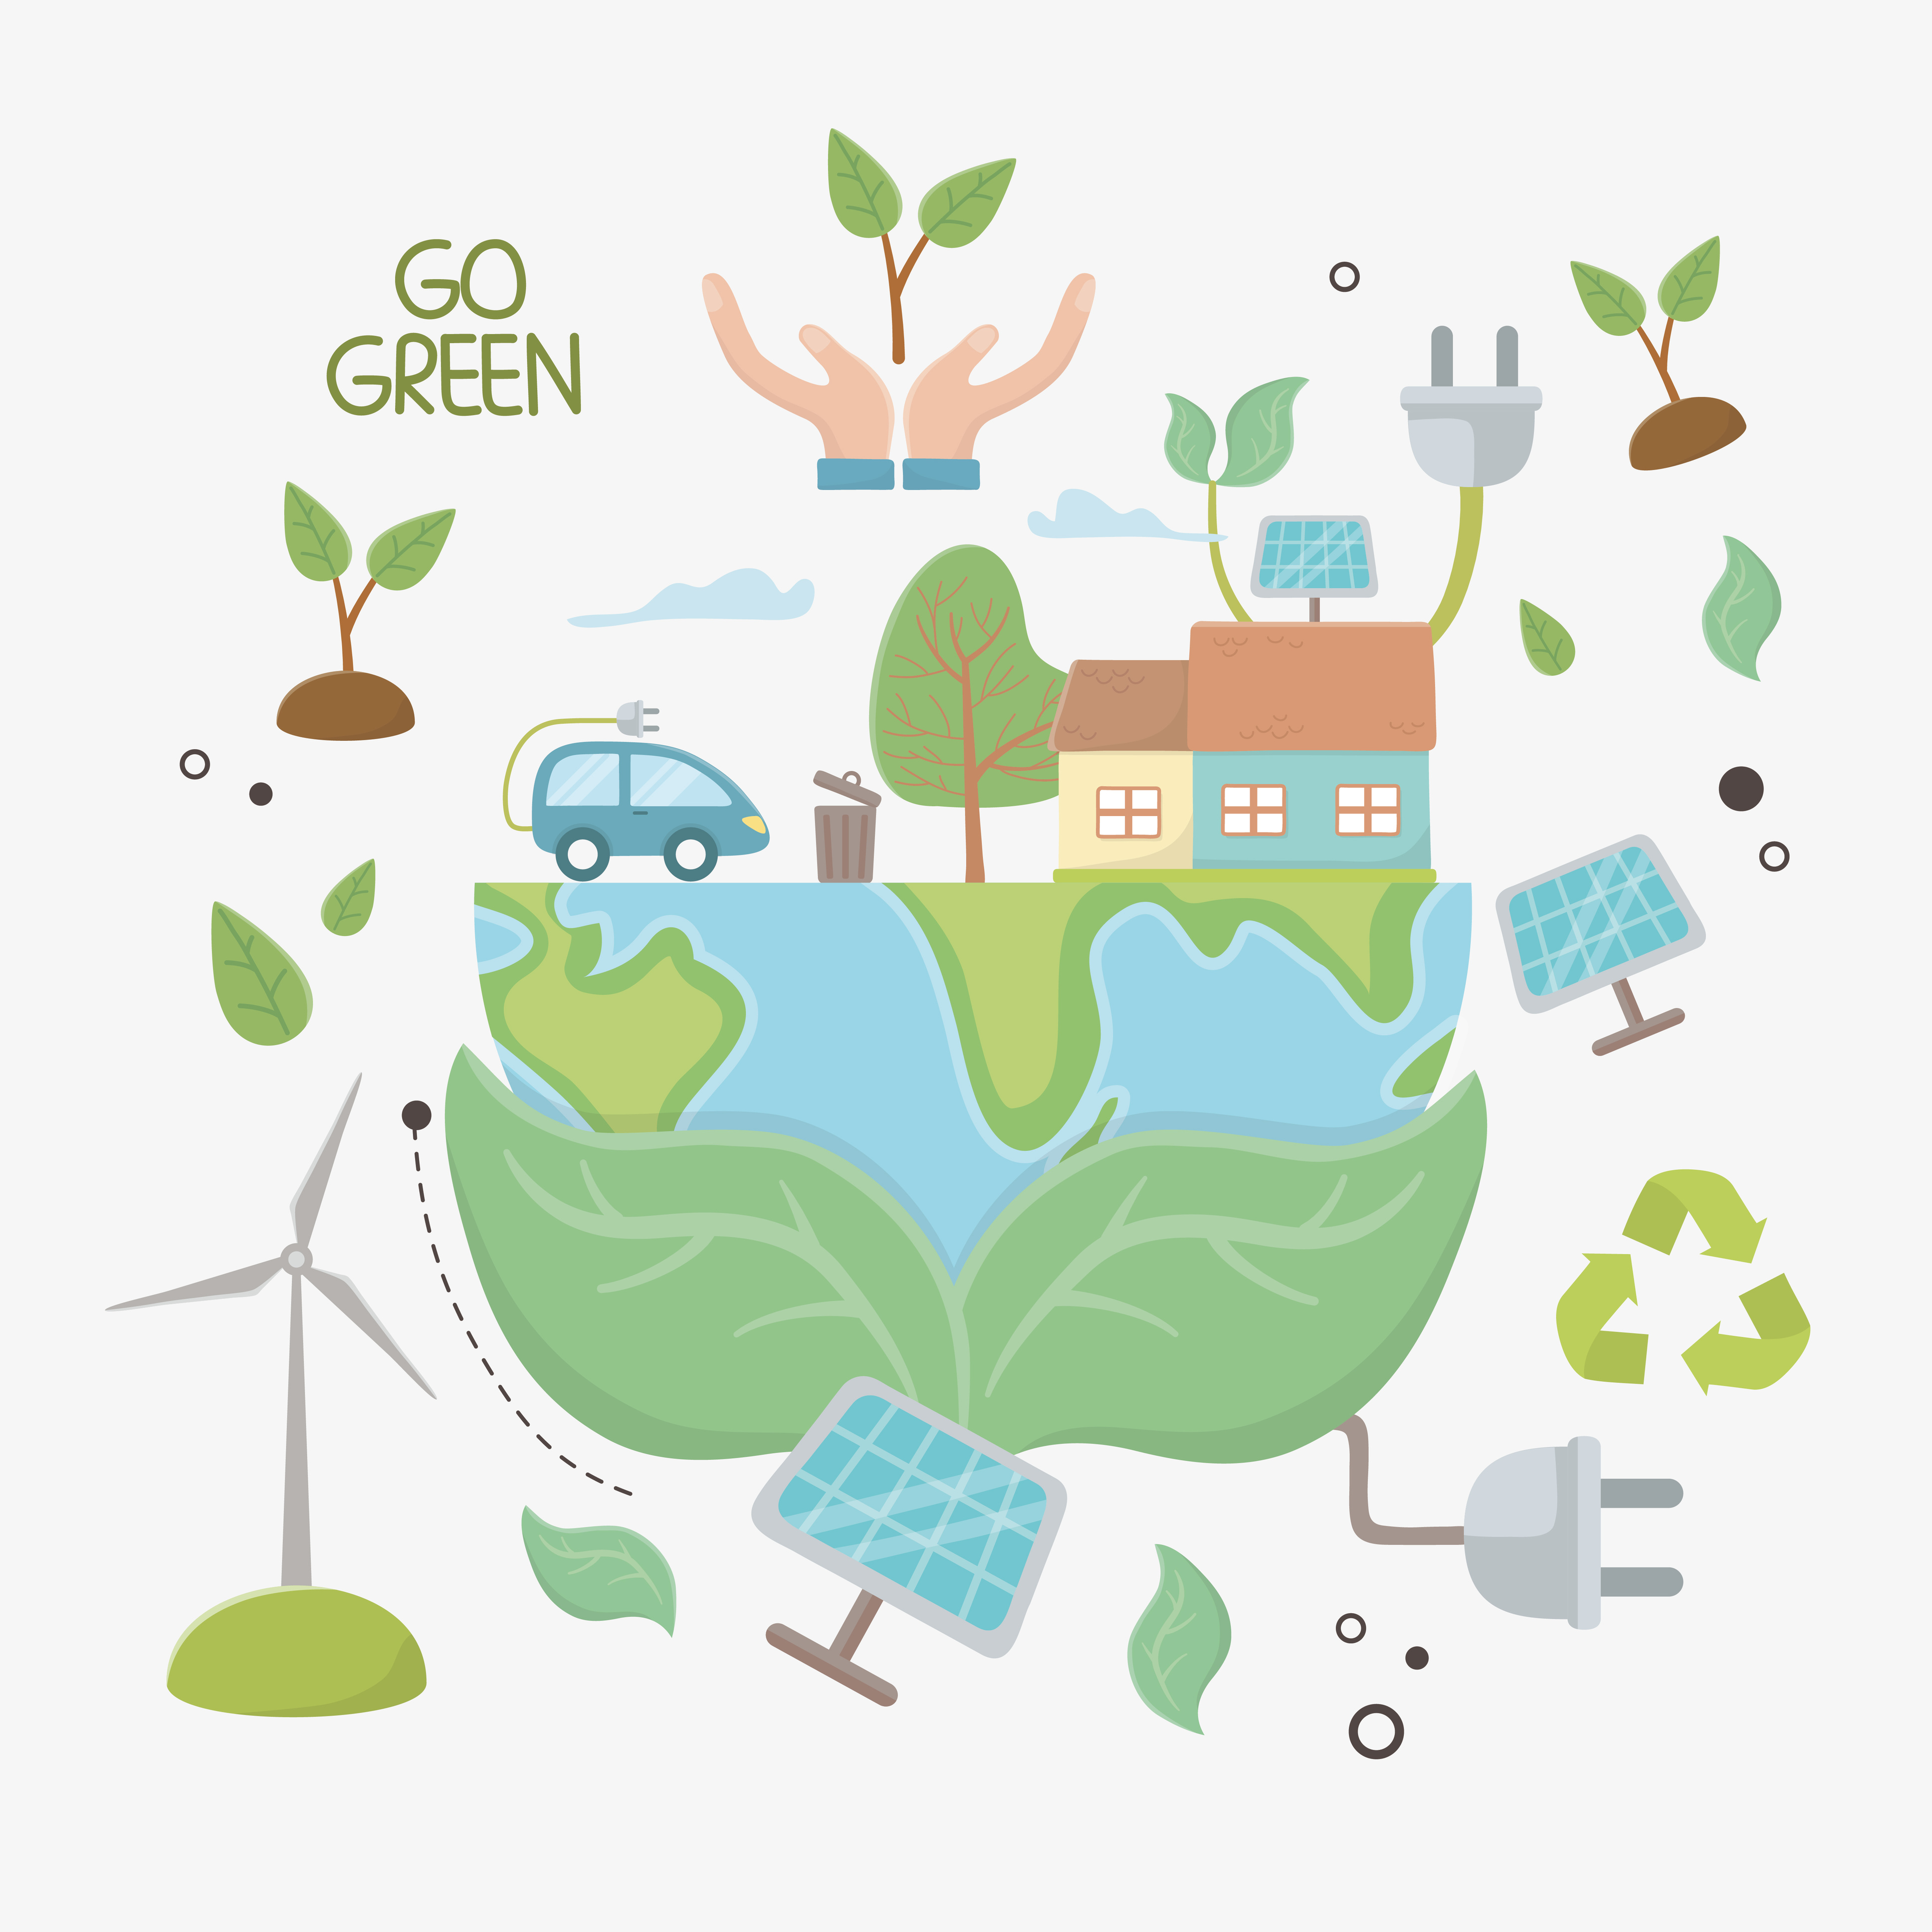 Green Economy e Covid - 19, spinta o freno?